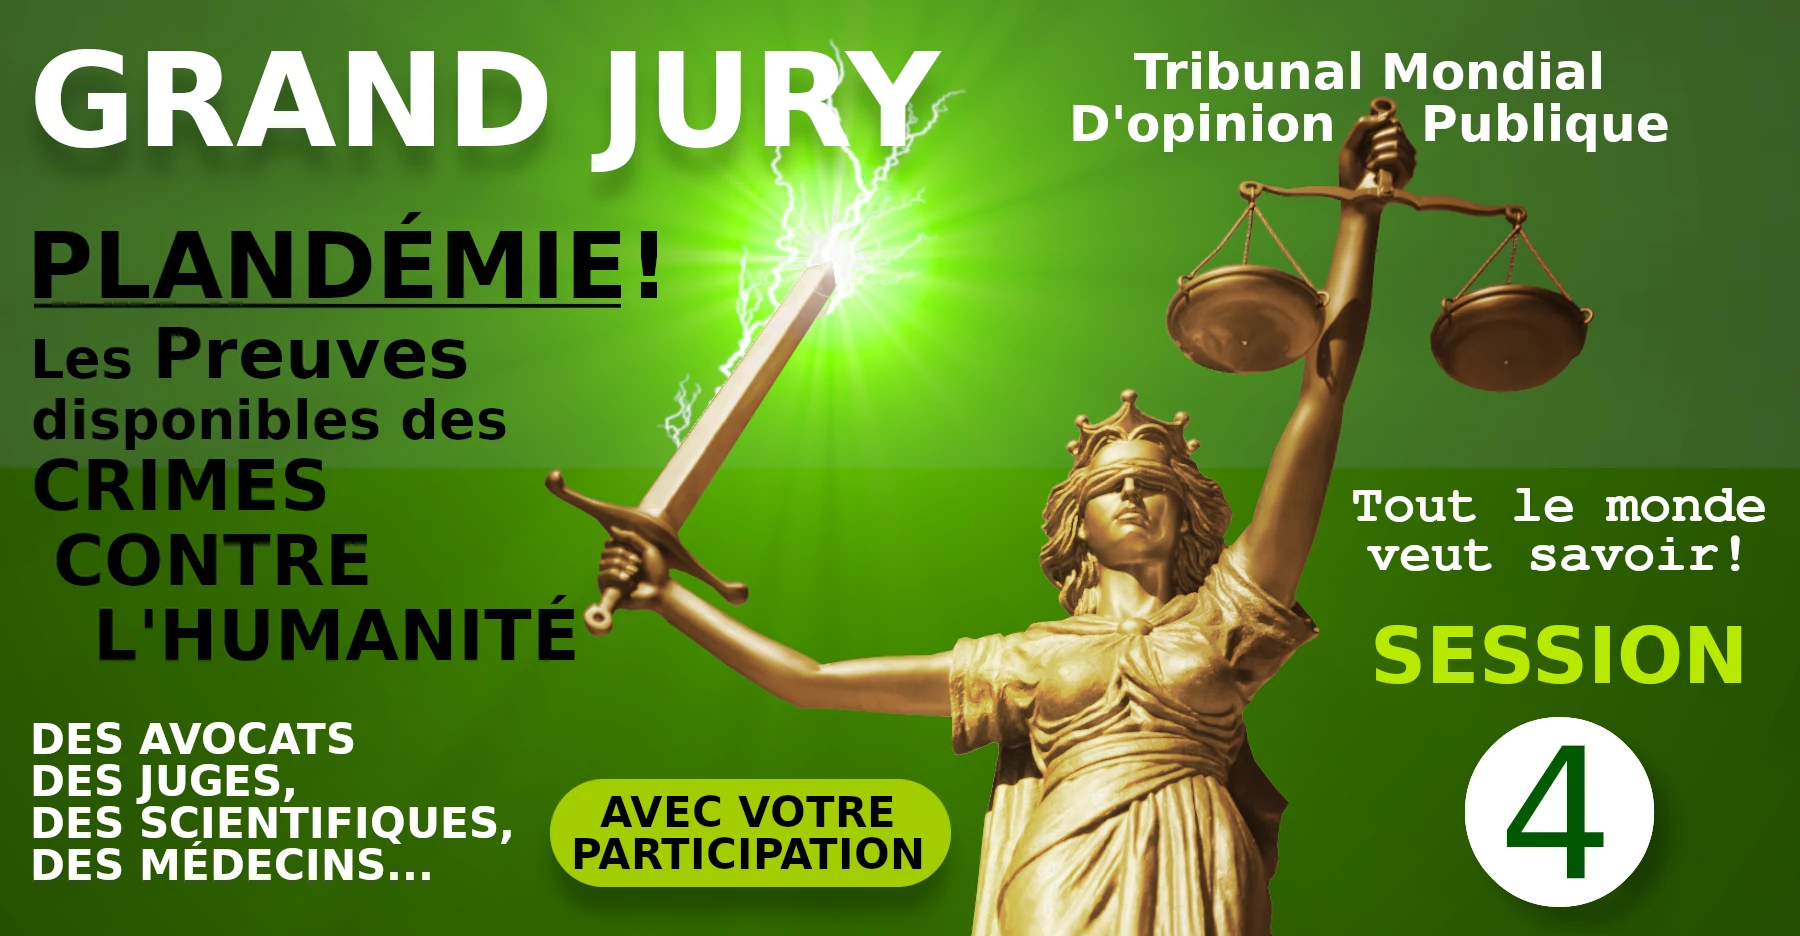 Grand-Jury -4 - JUSTICE ENSEMBLE!